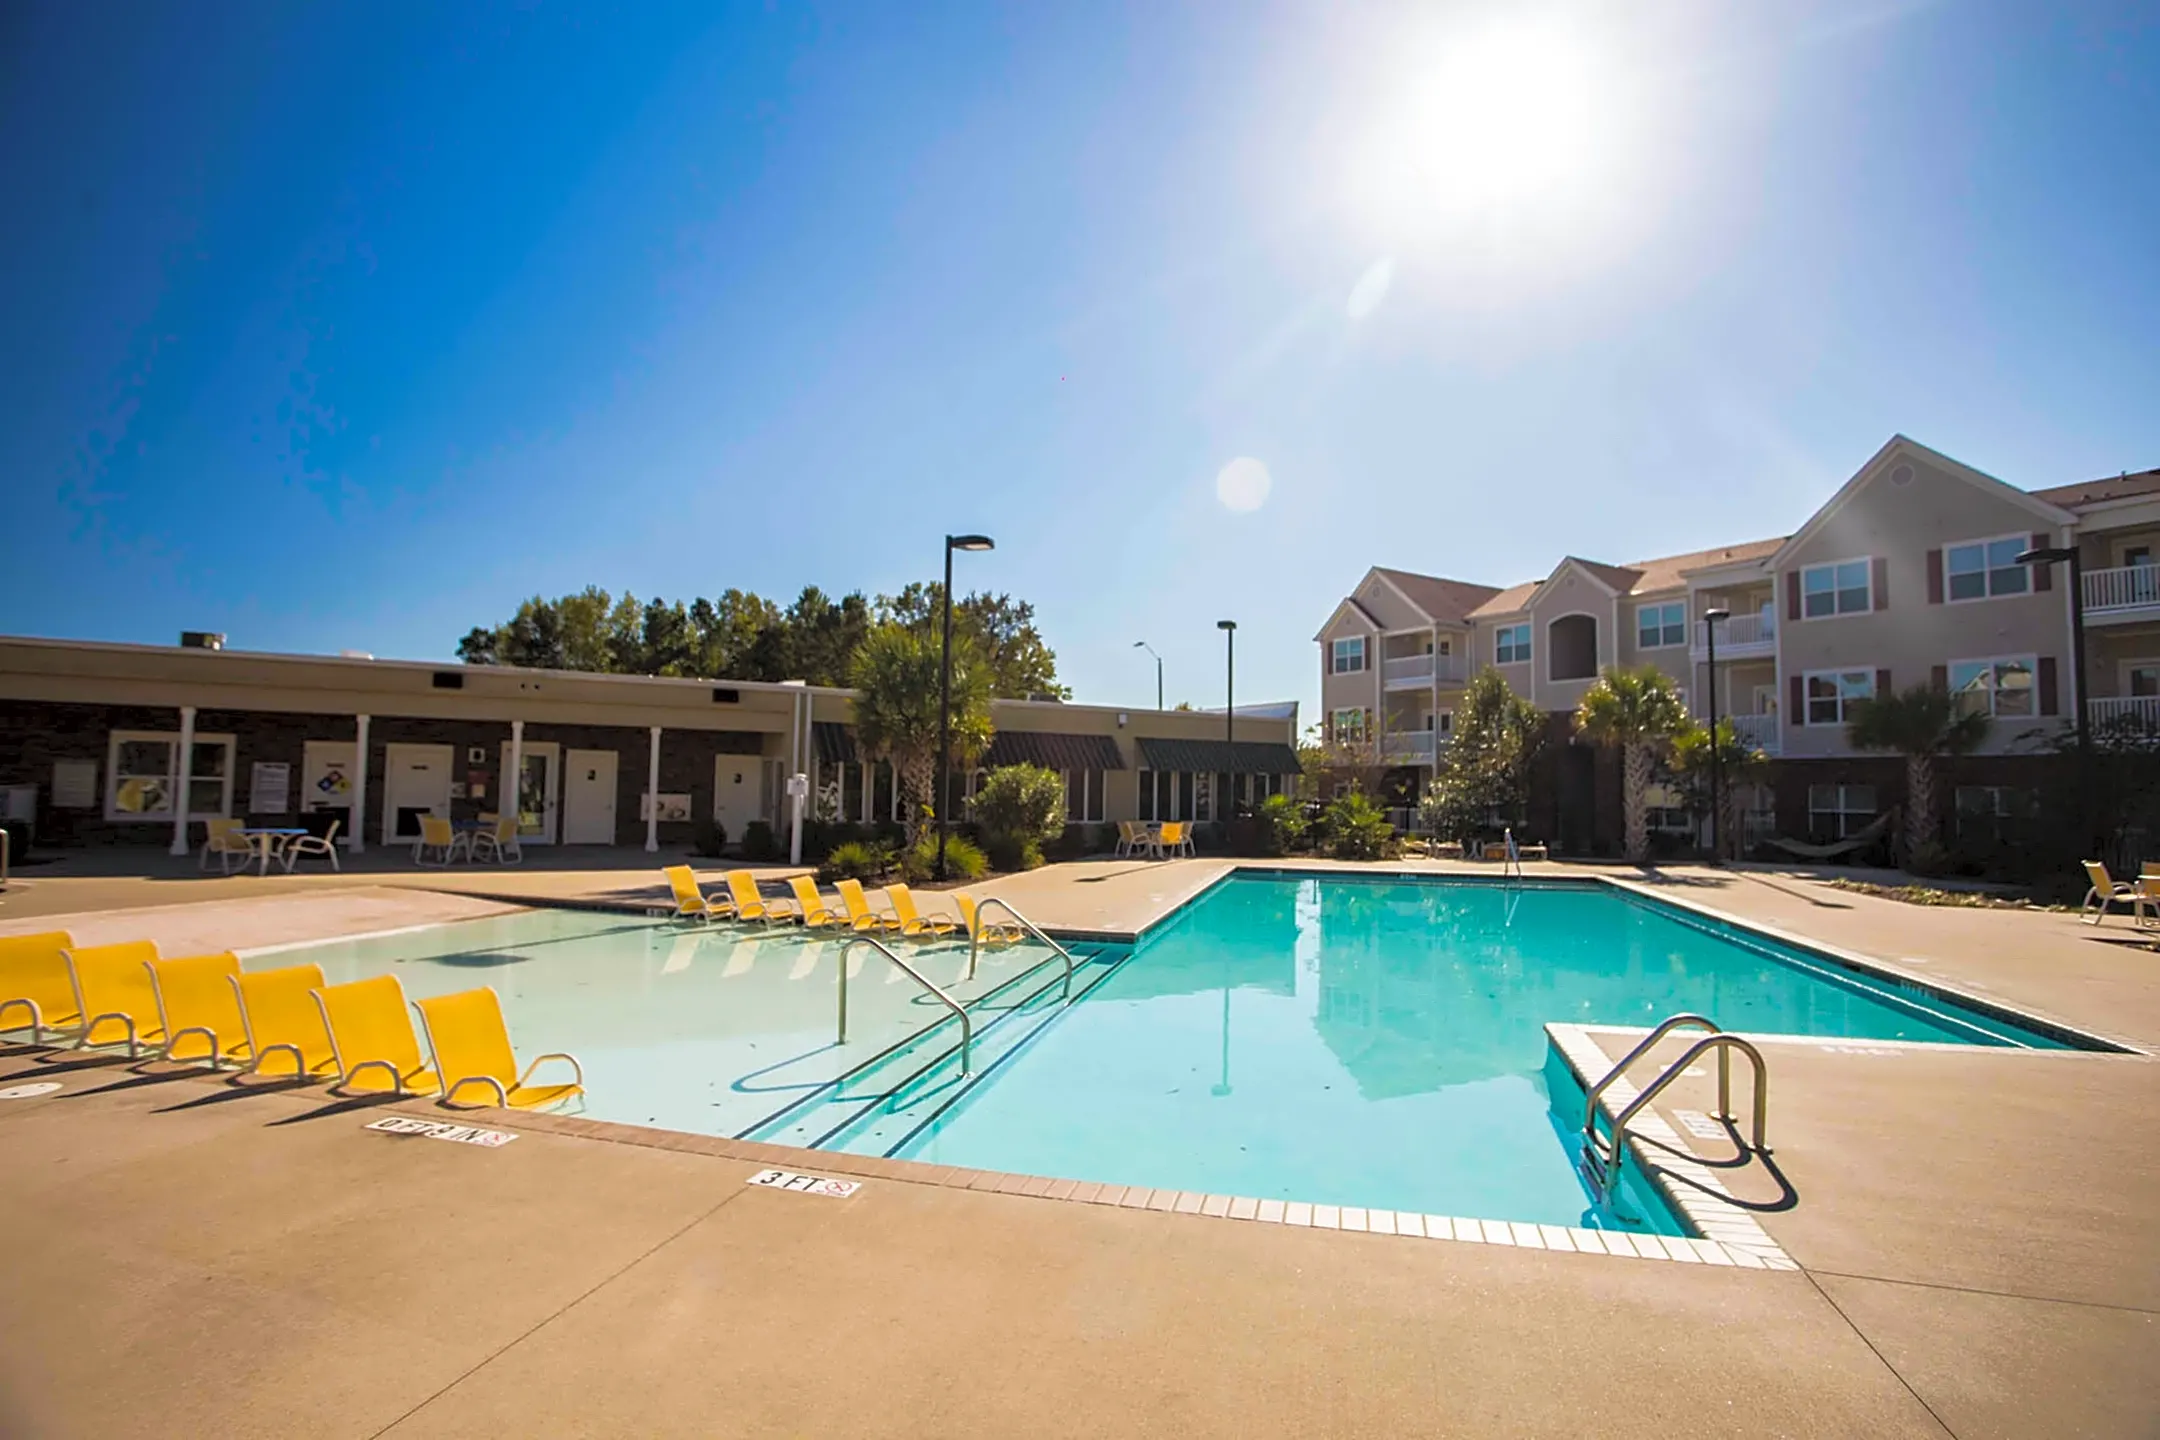 Pool - Carolina Cove Apartments - PER BED LEASE - Wilmington, NC